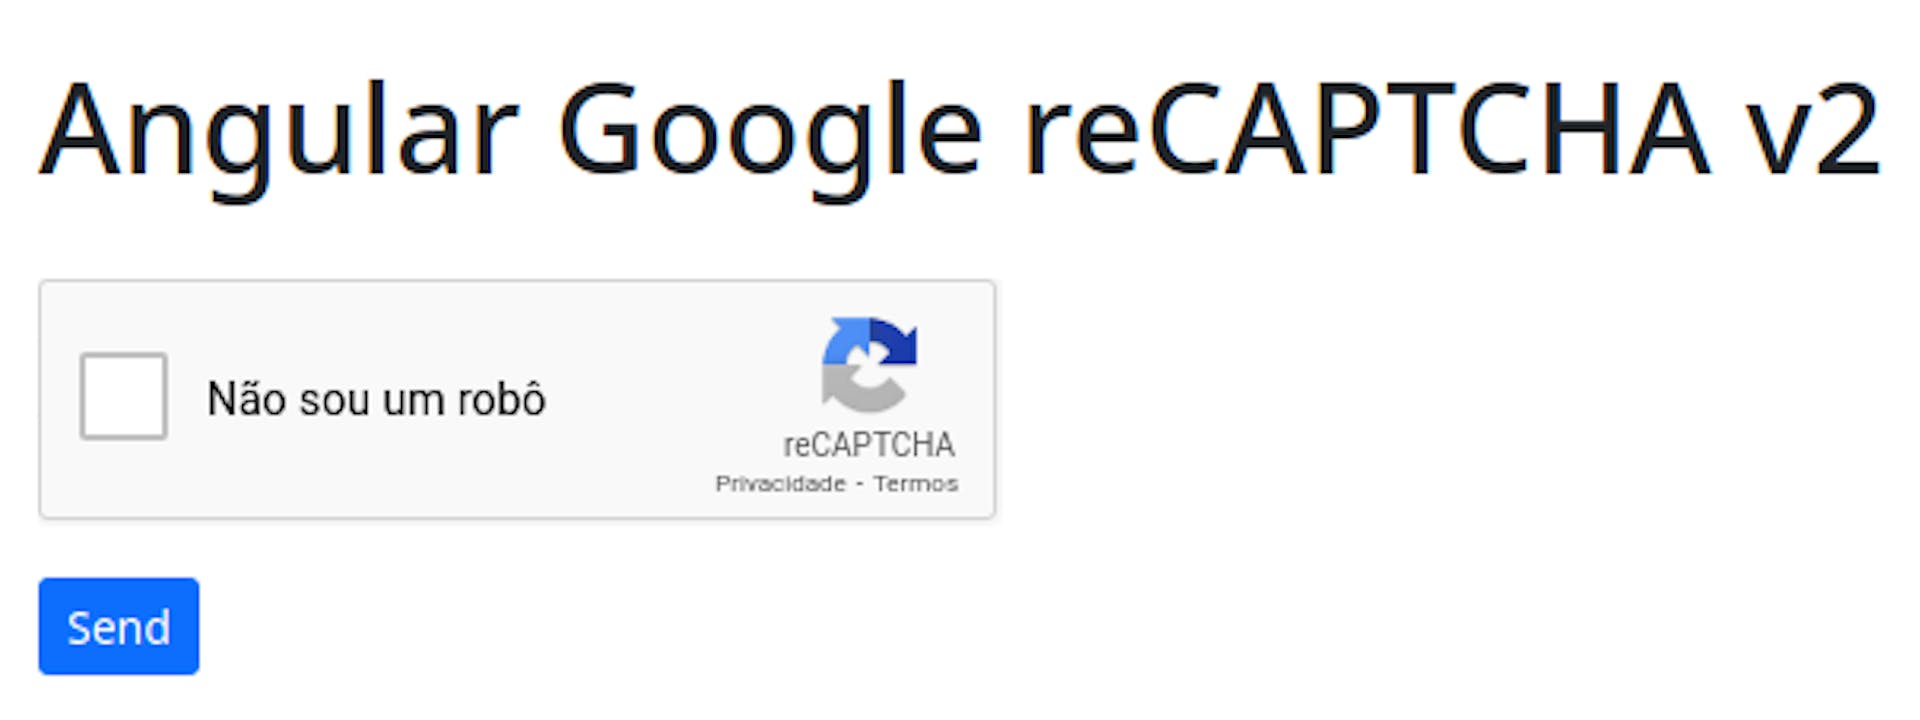 Angular Google reCAPTCHA v2